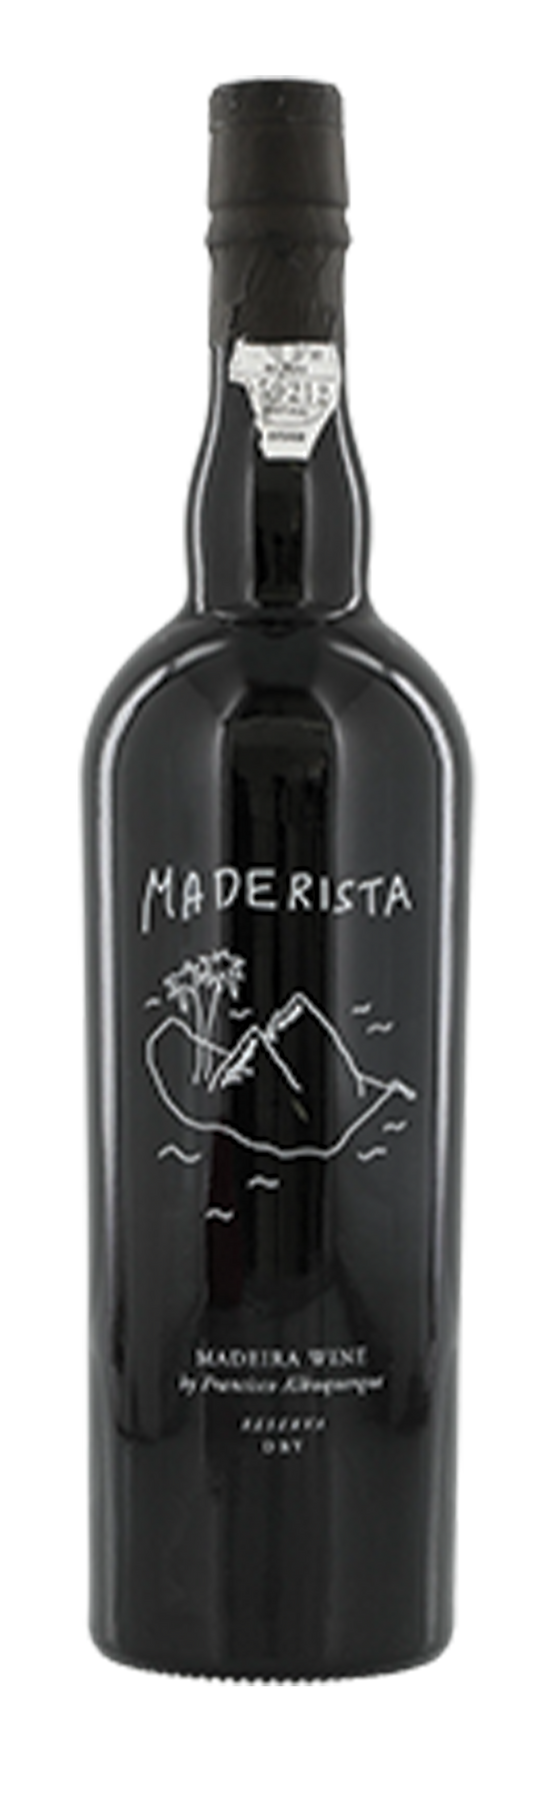 Maderista Dry Tinta Negra Reserva 19% 75cl Madeira